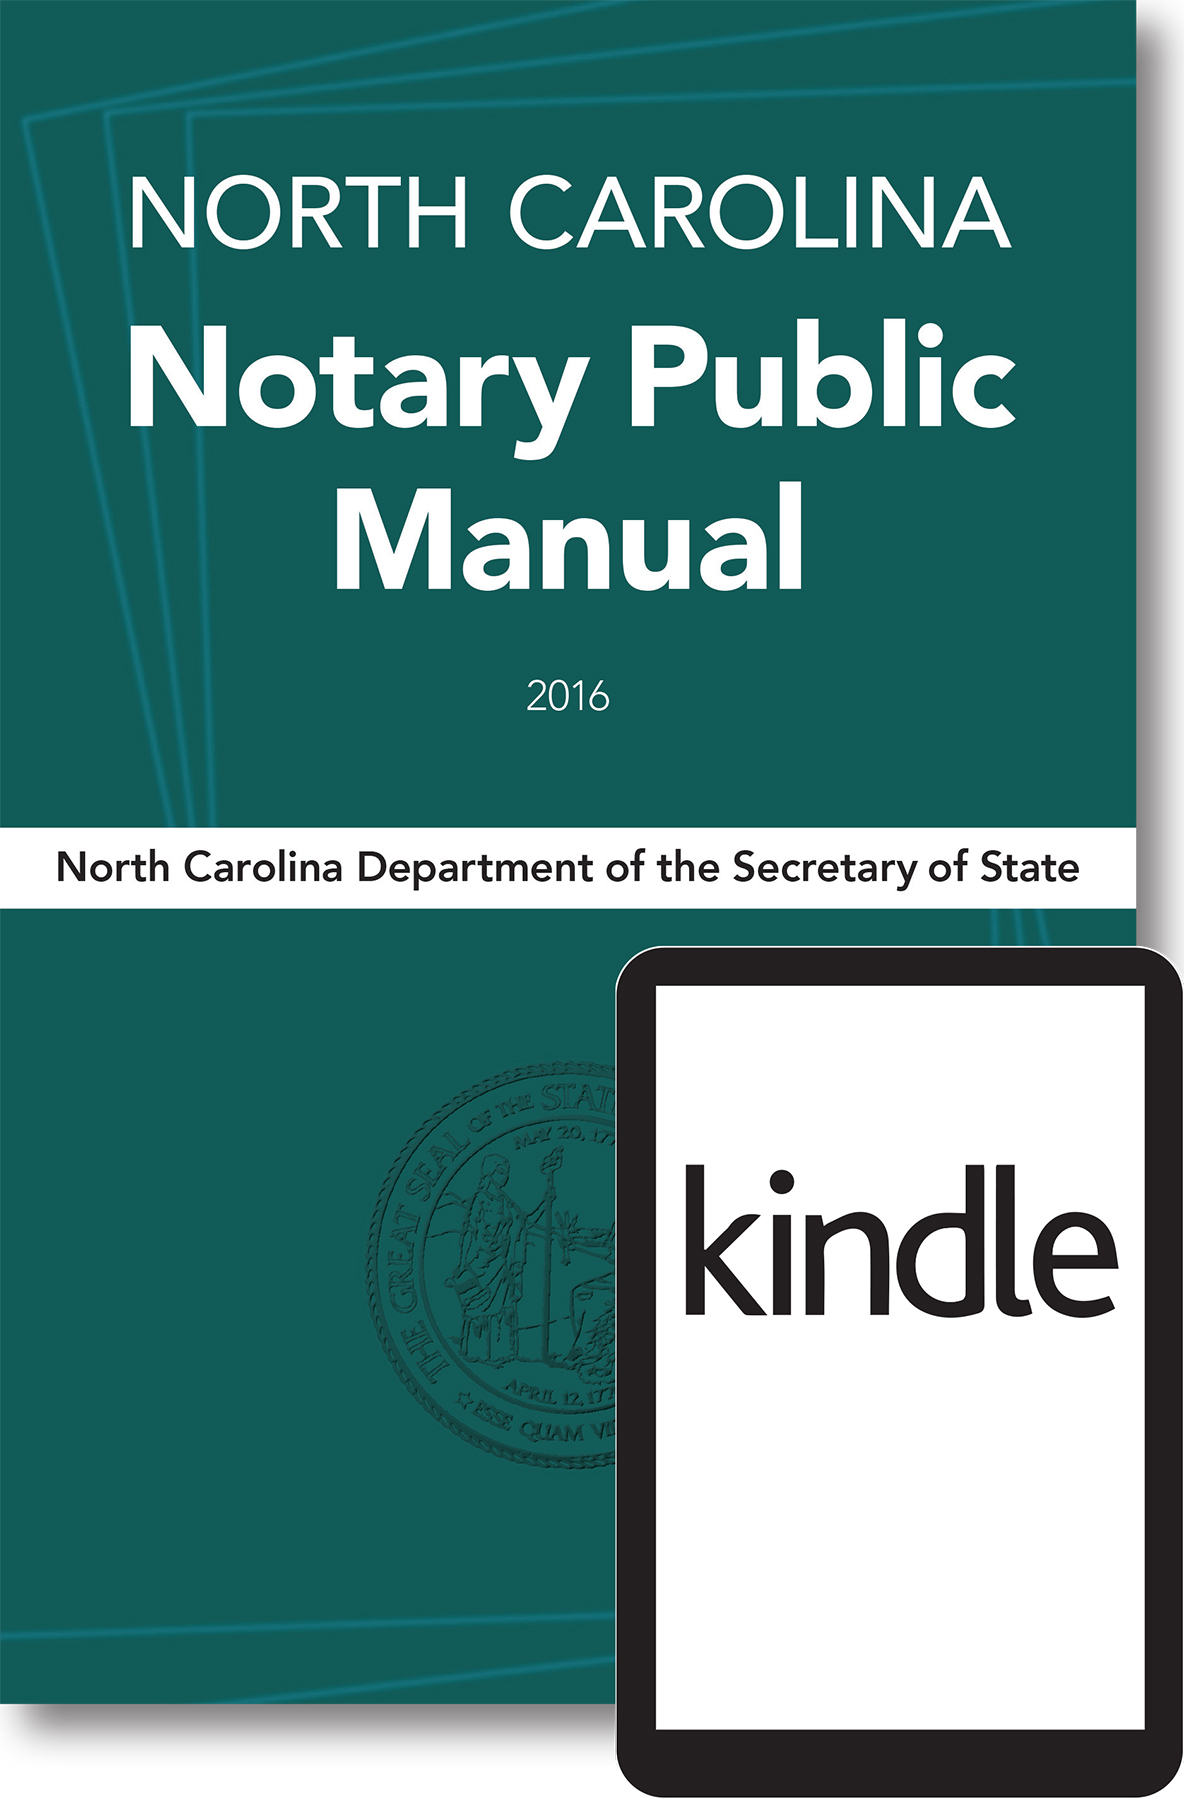 North Carolina Notary Public Manual, eBook for Kindle